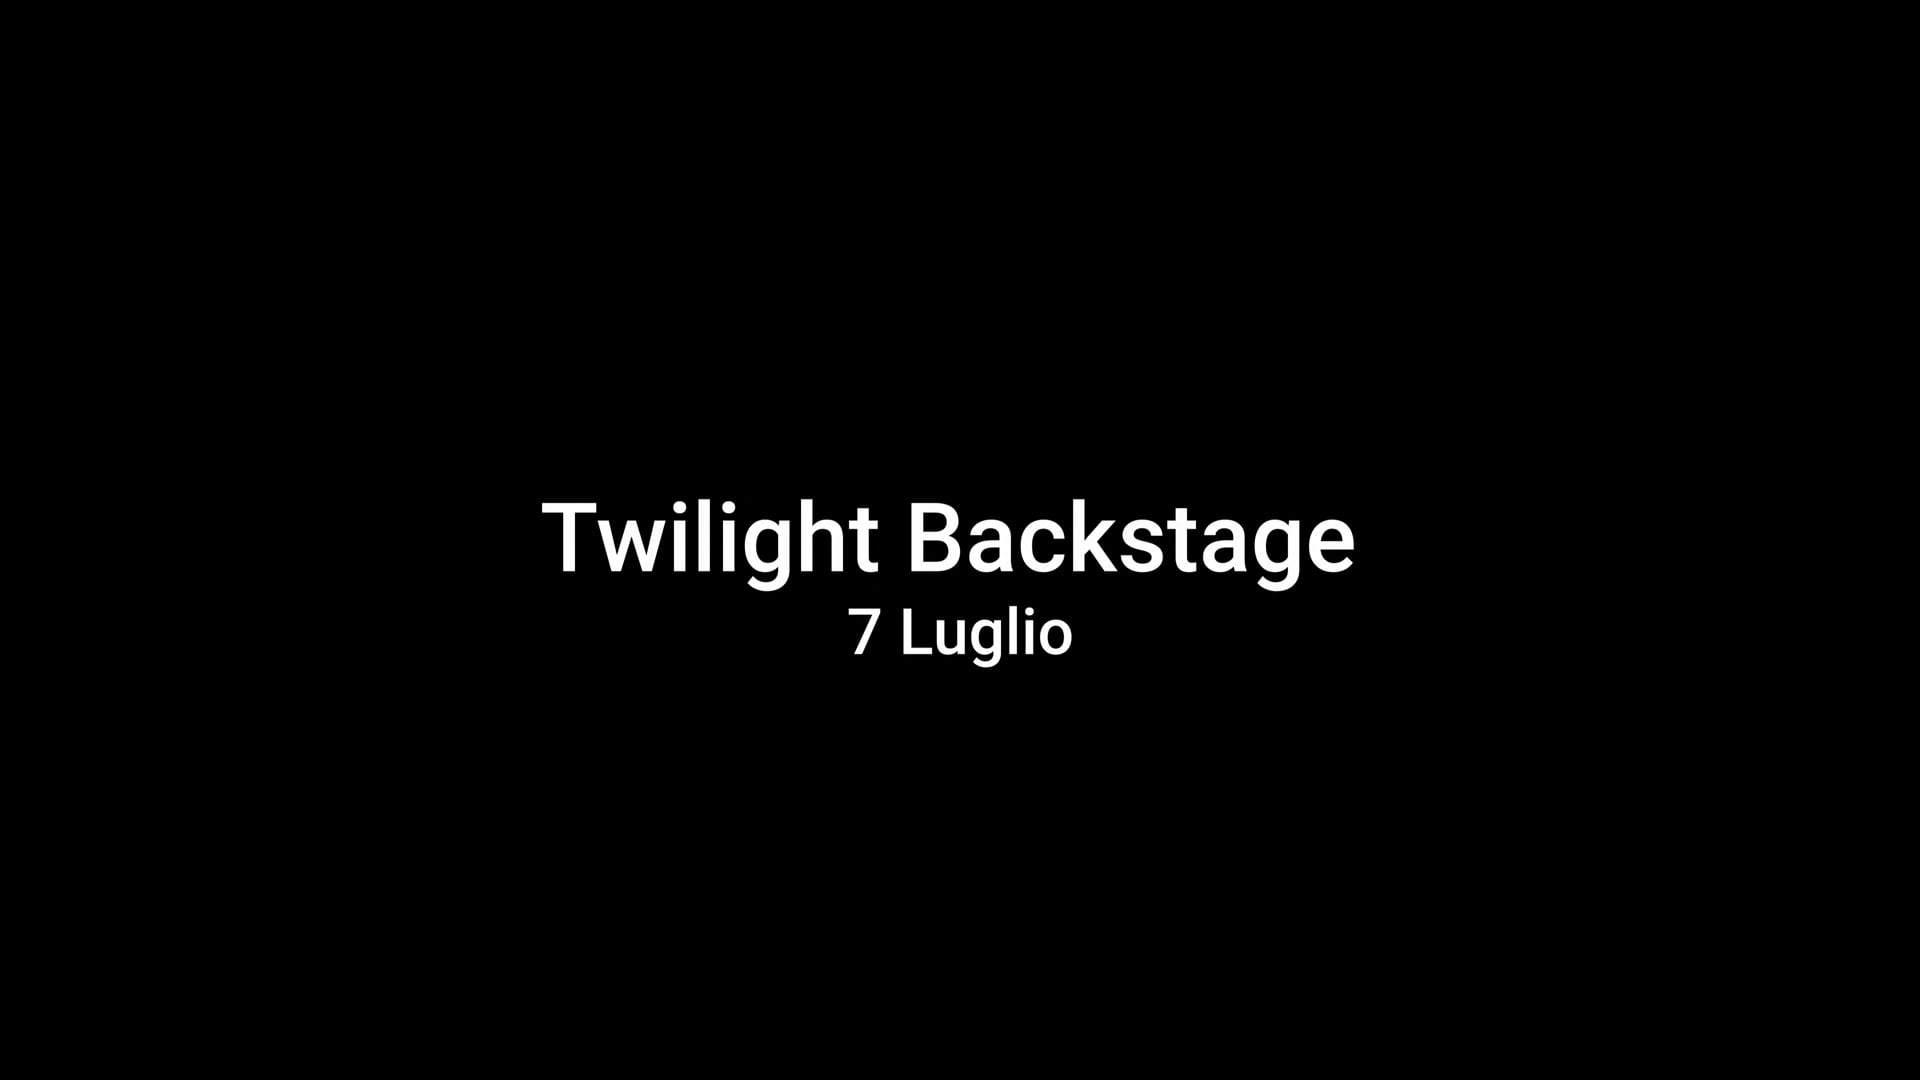 7 Luglio backstage